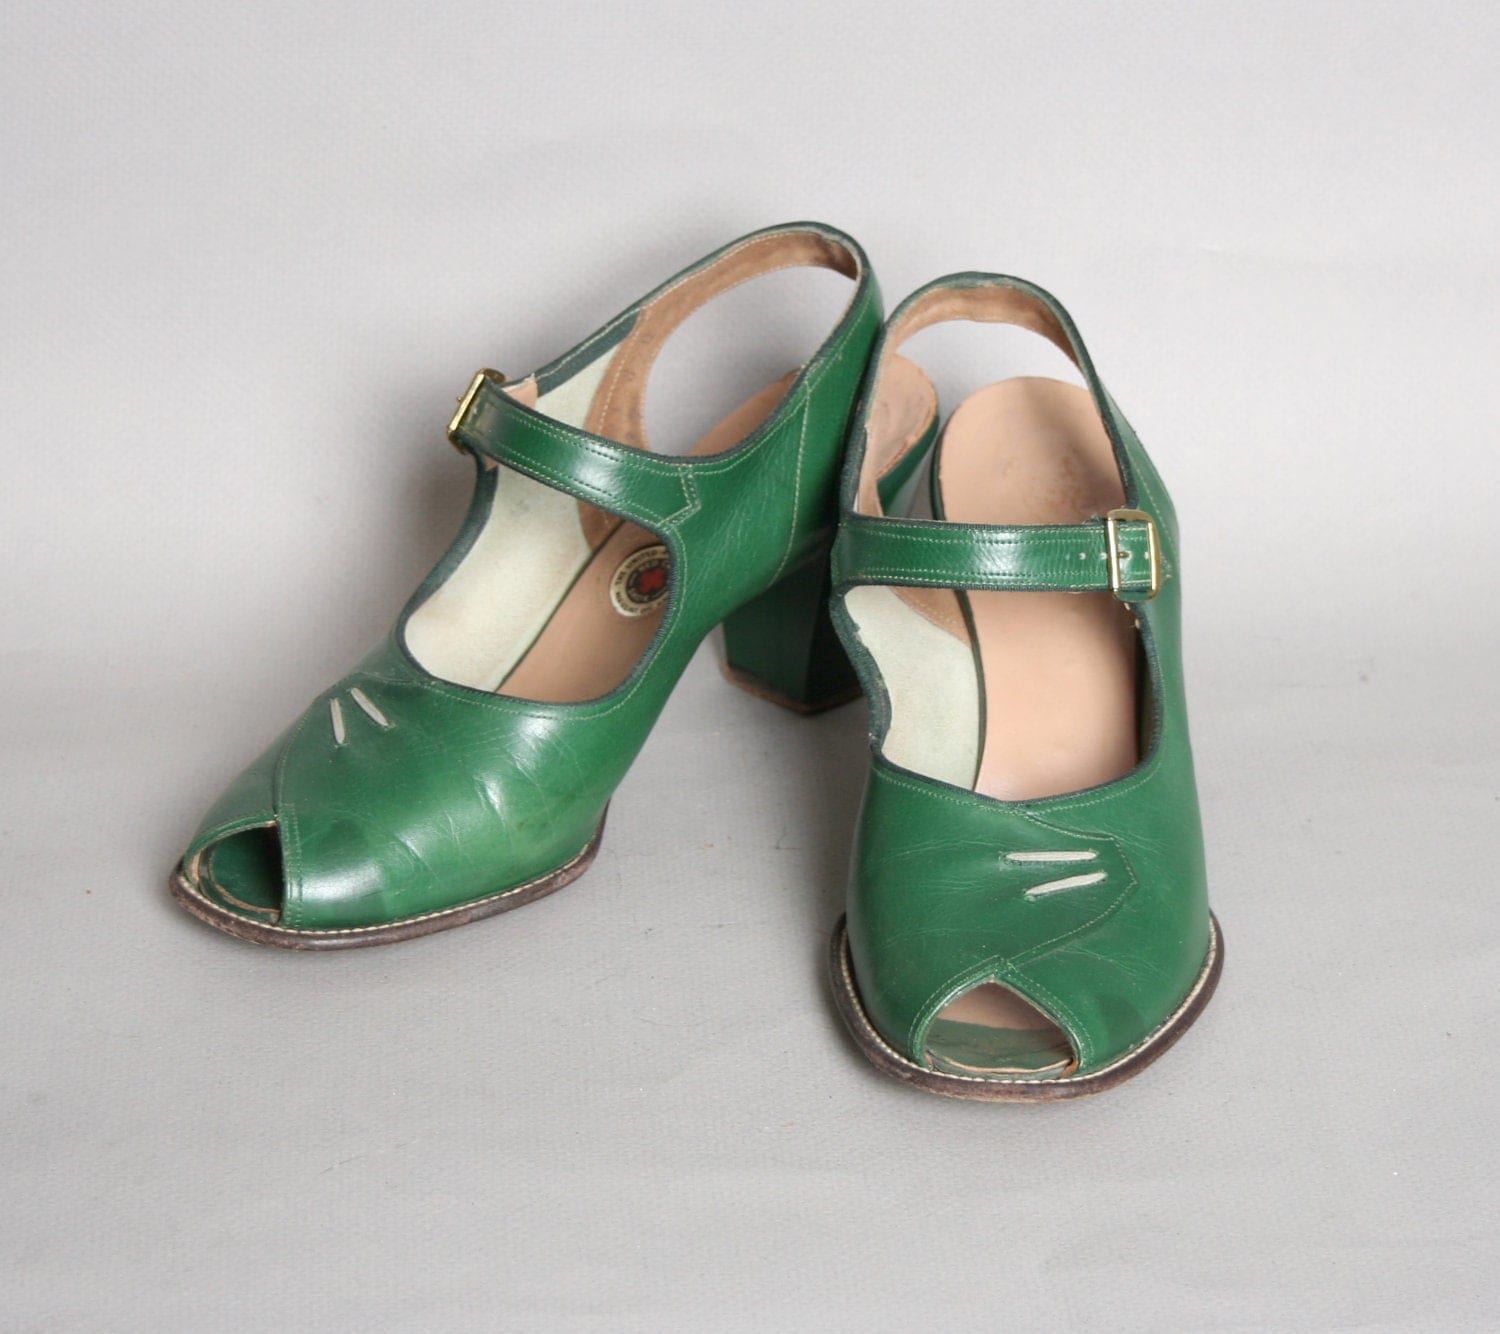 1940s PEEP Toe HEELS / Emerald Green Mary Janes by LuckyDryGoods